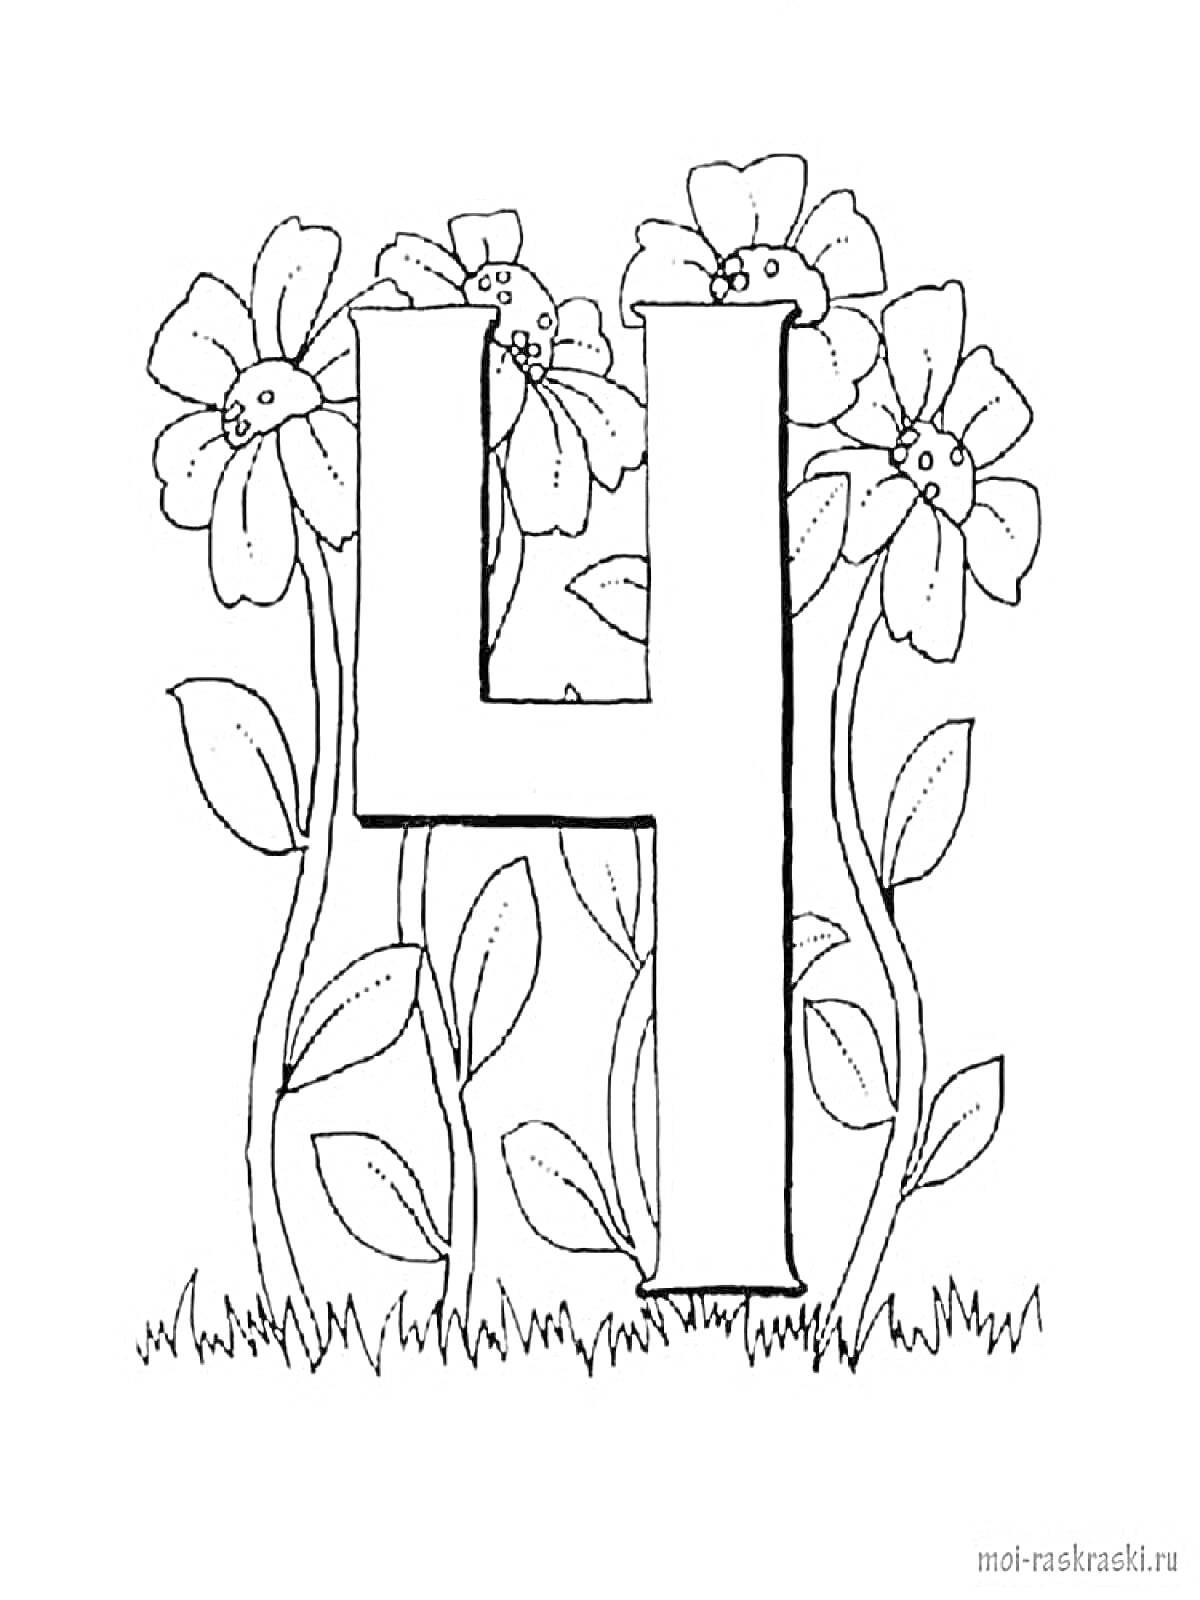 Раскраска Цифра 4 на фоне цветов и травы